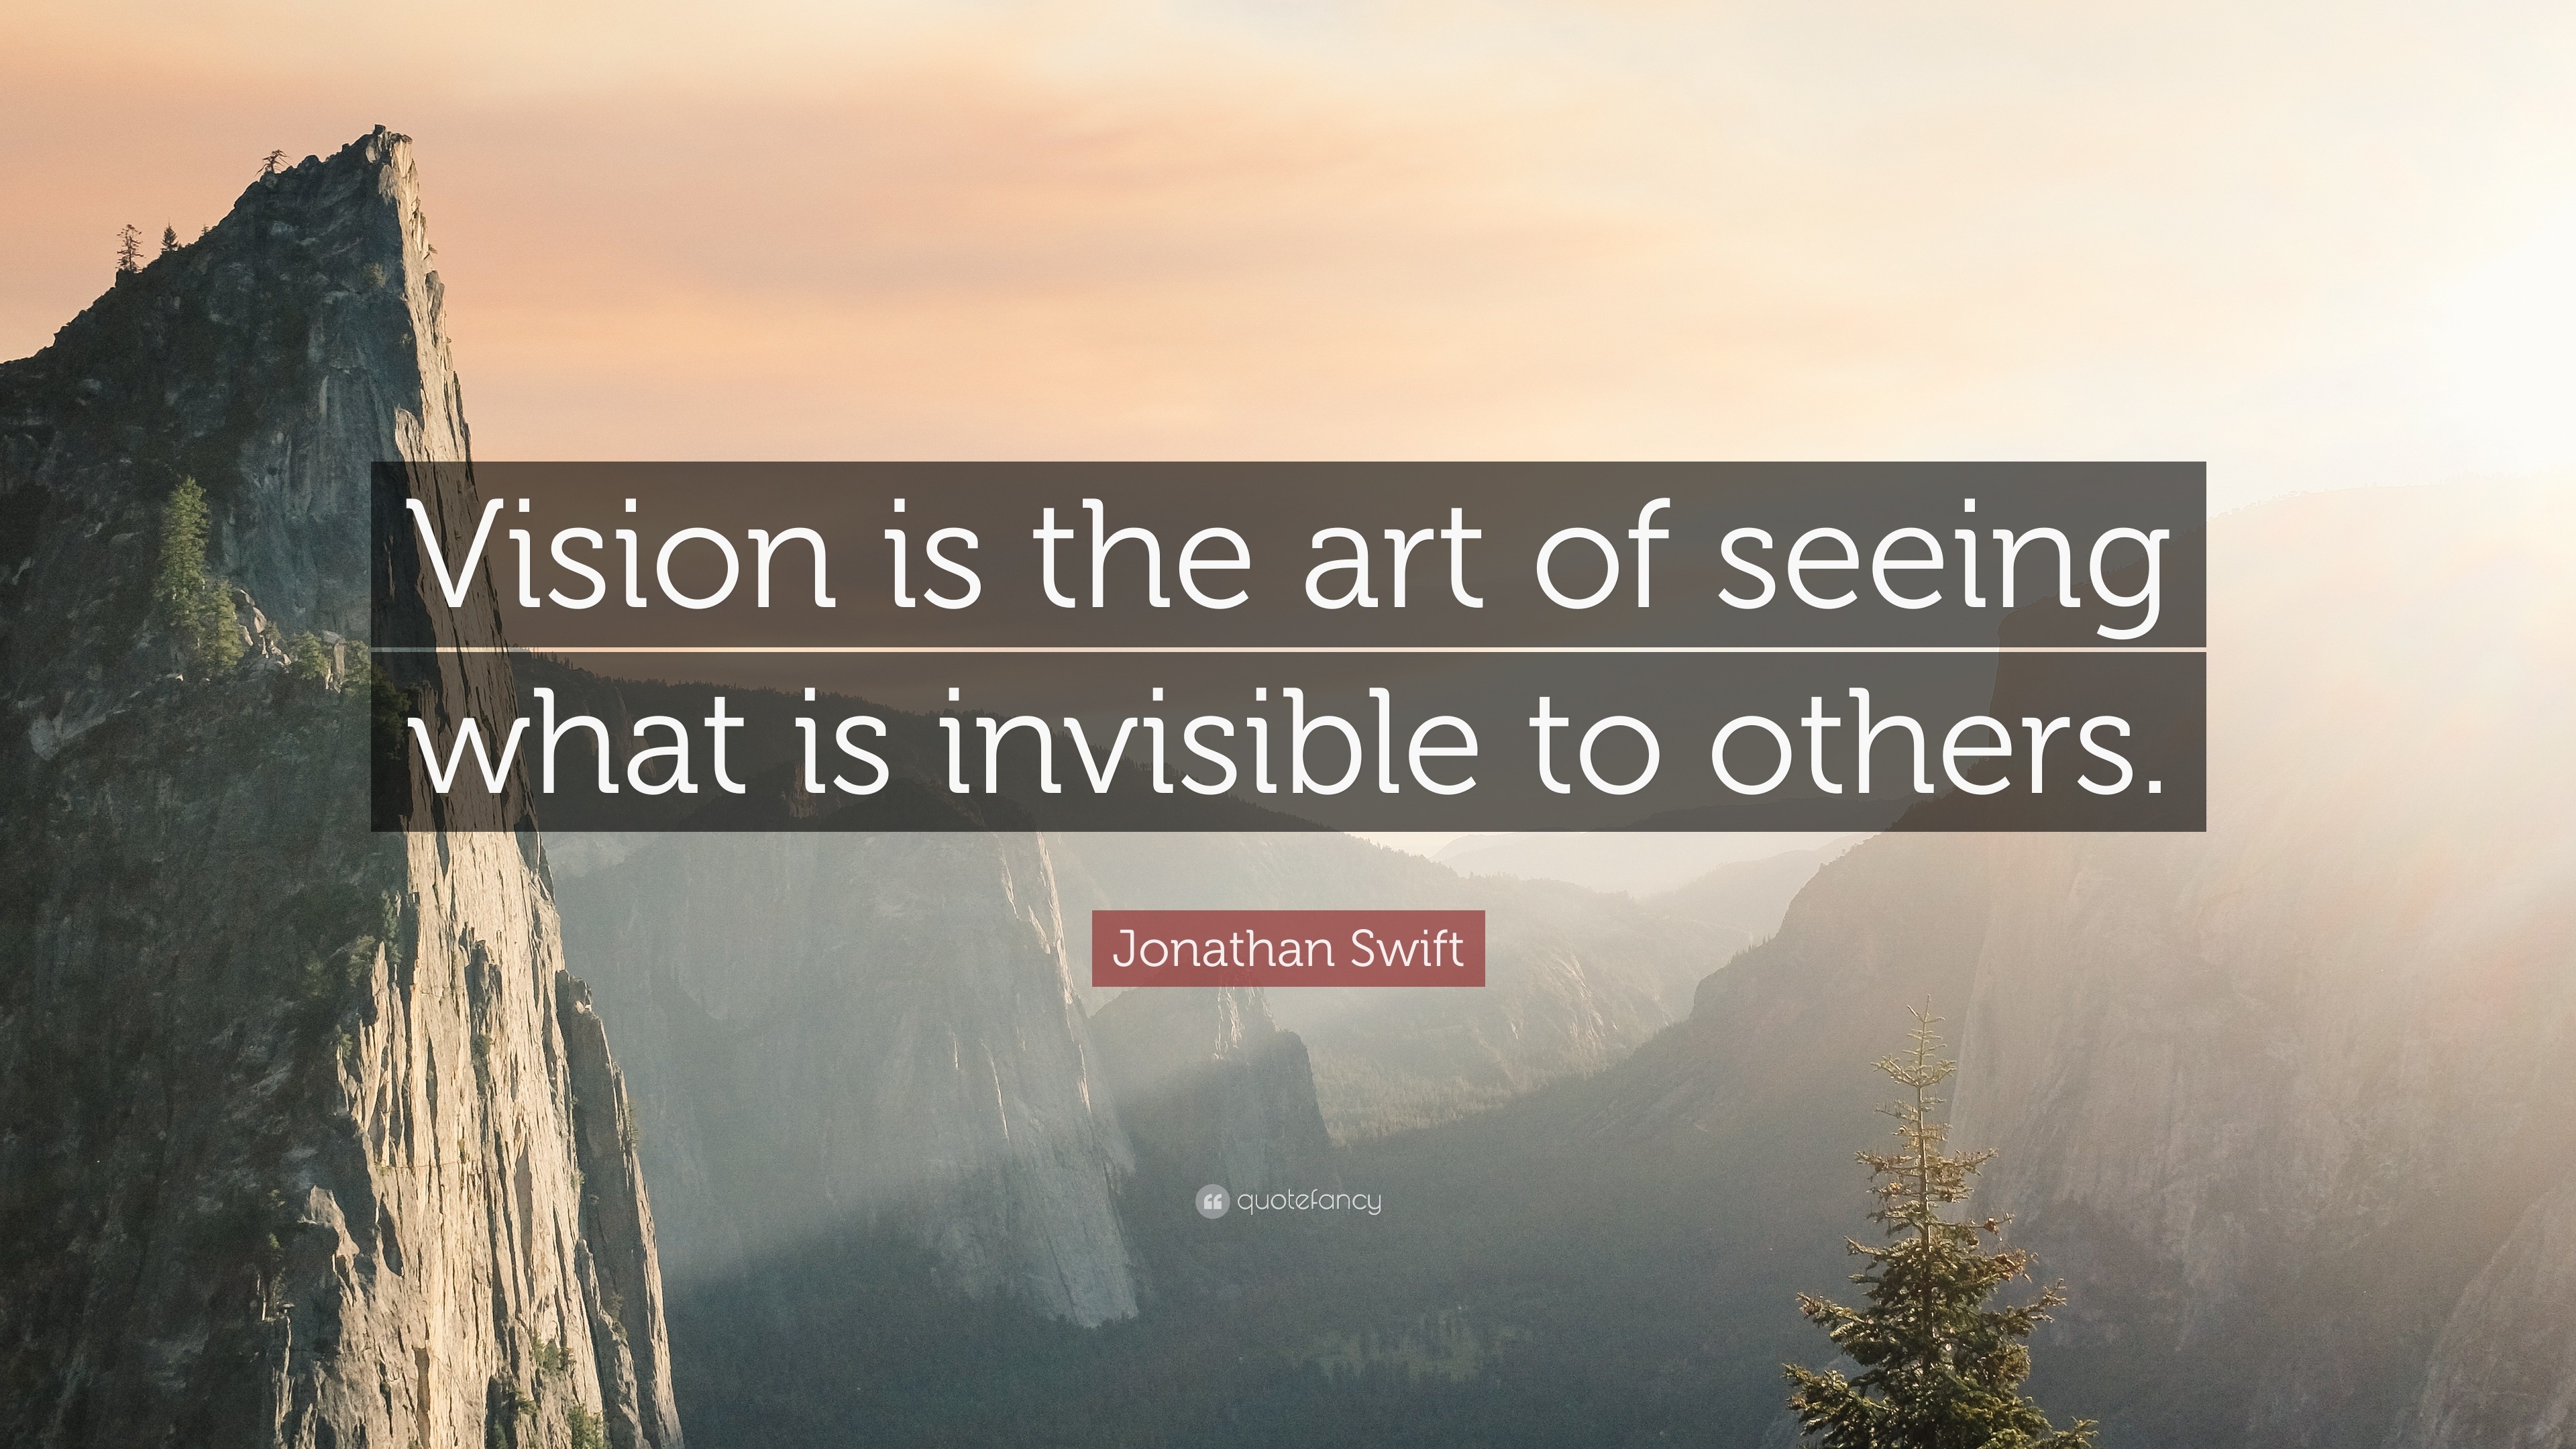 Jonathan Swift Quote: 